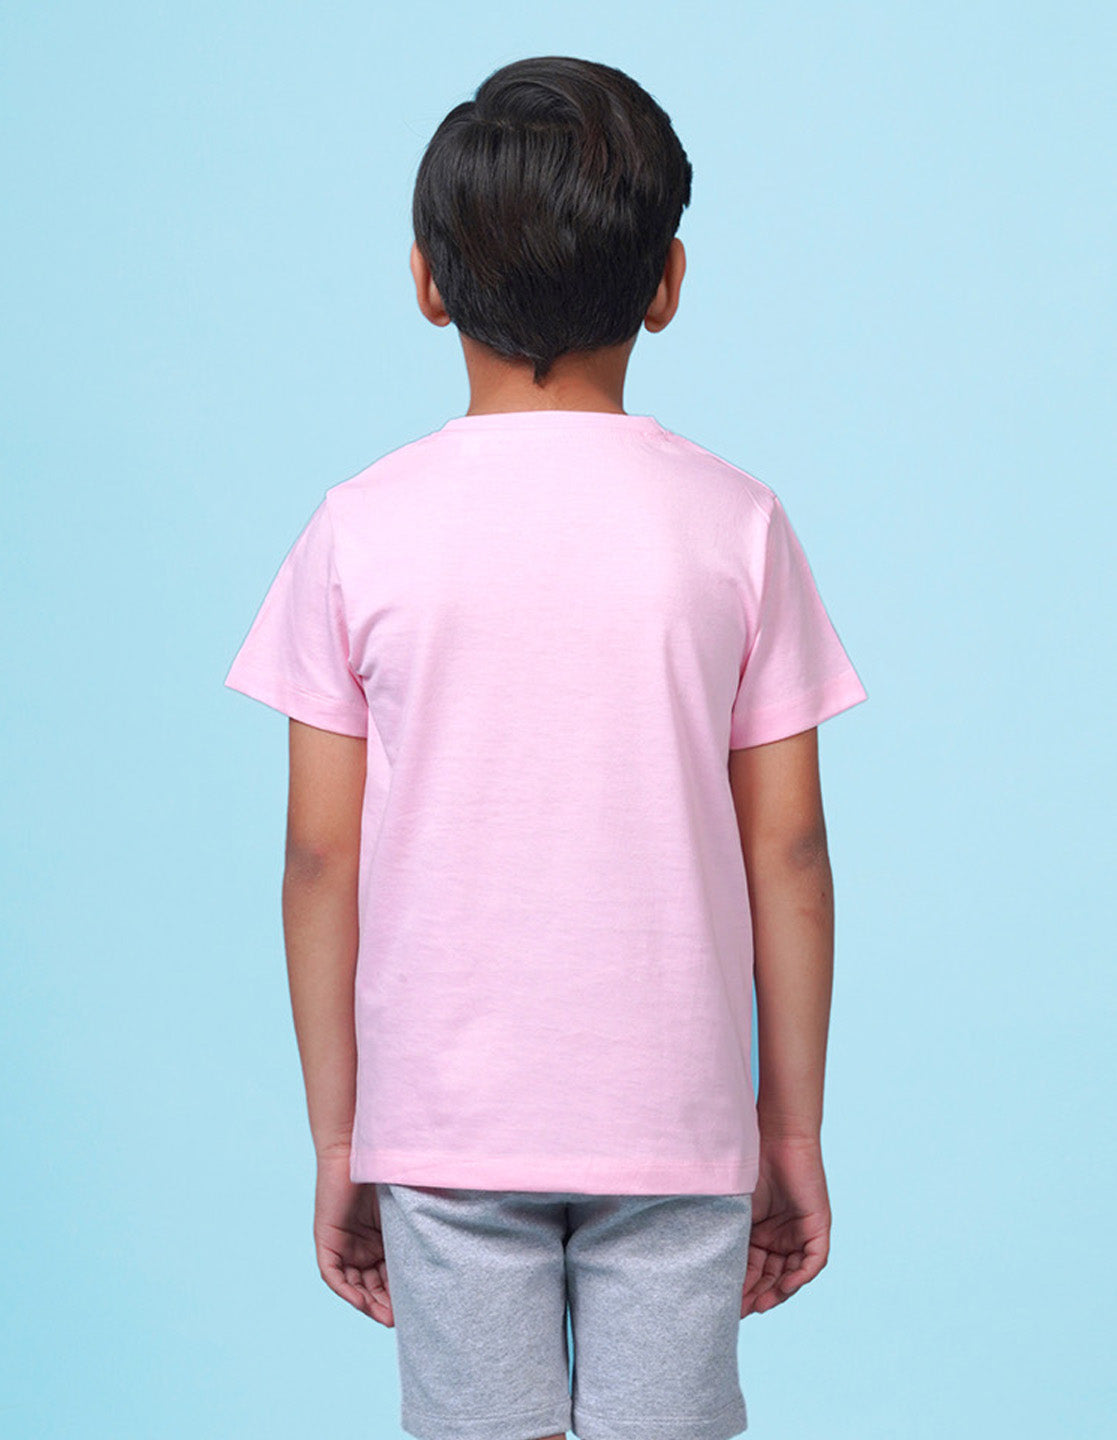 Nusyl Text Printed Light Pink Colour T-shirts